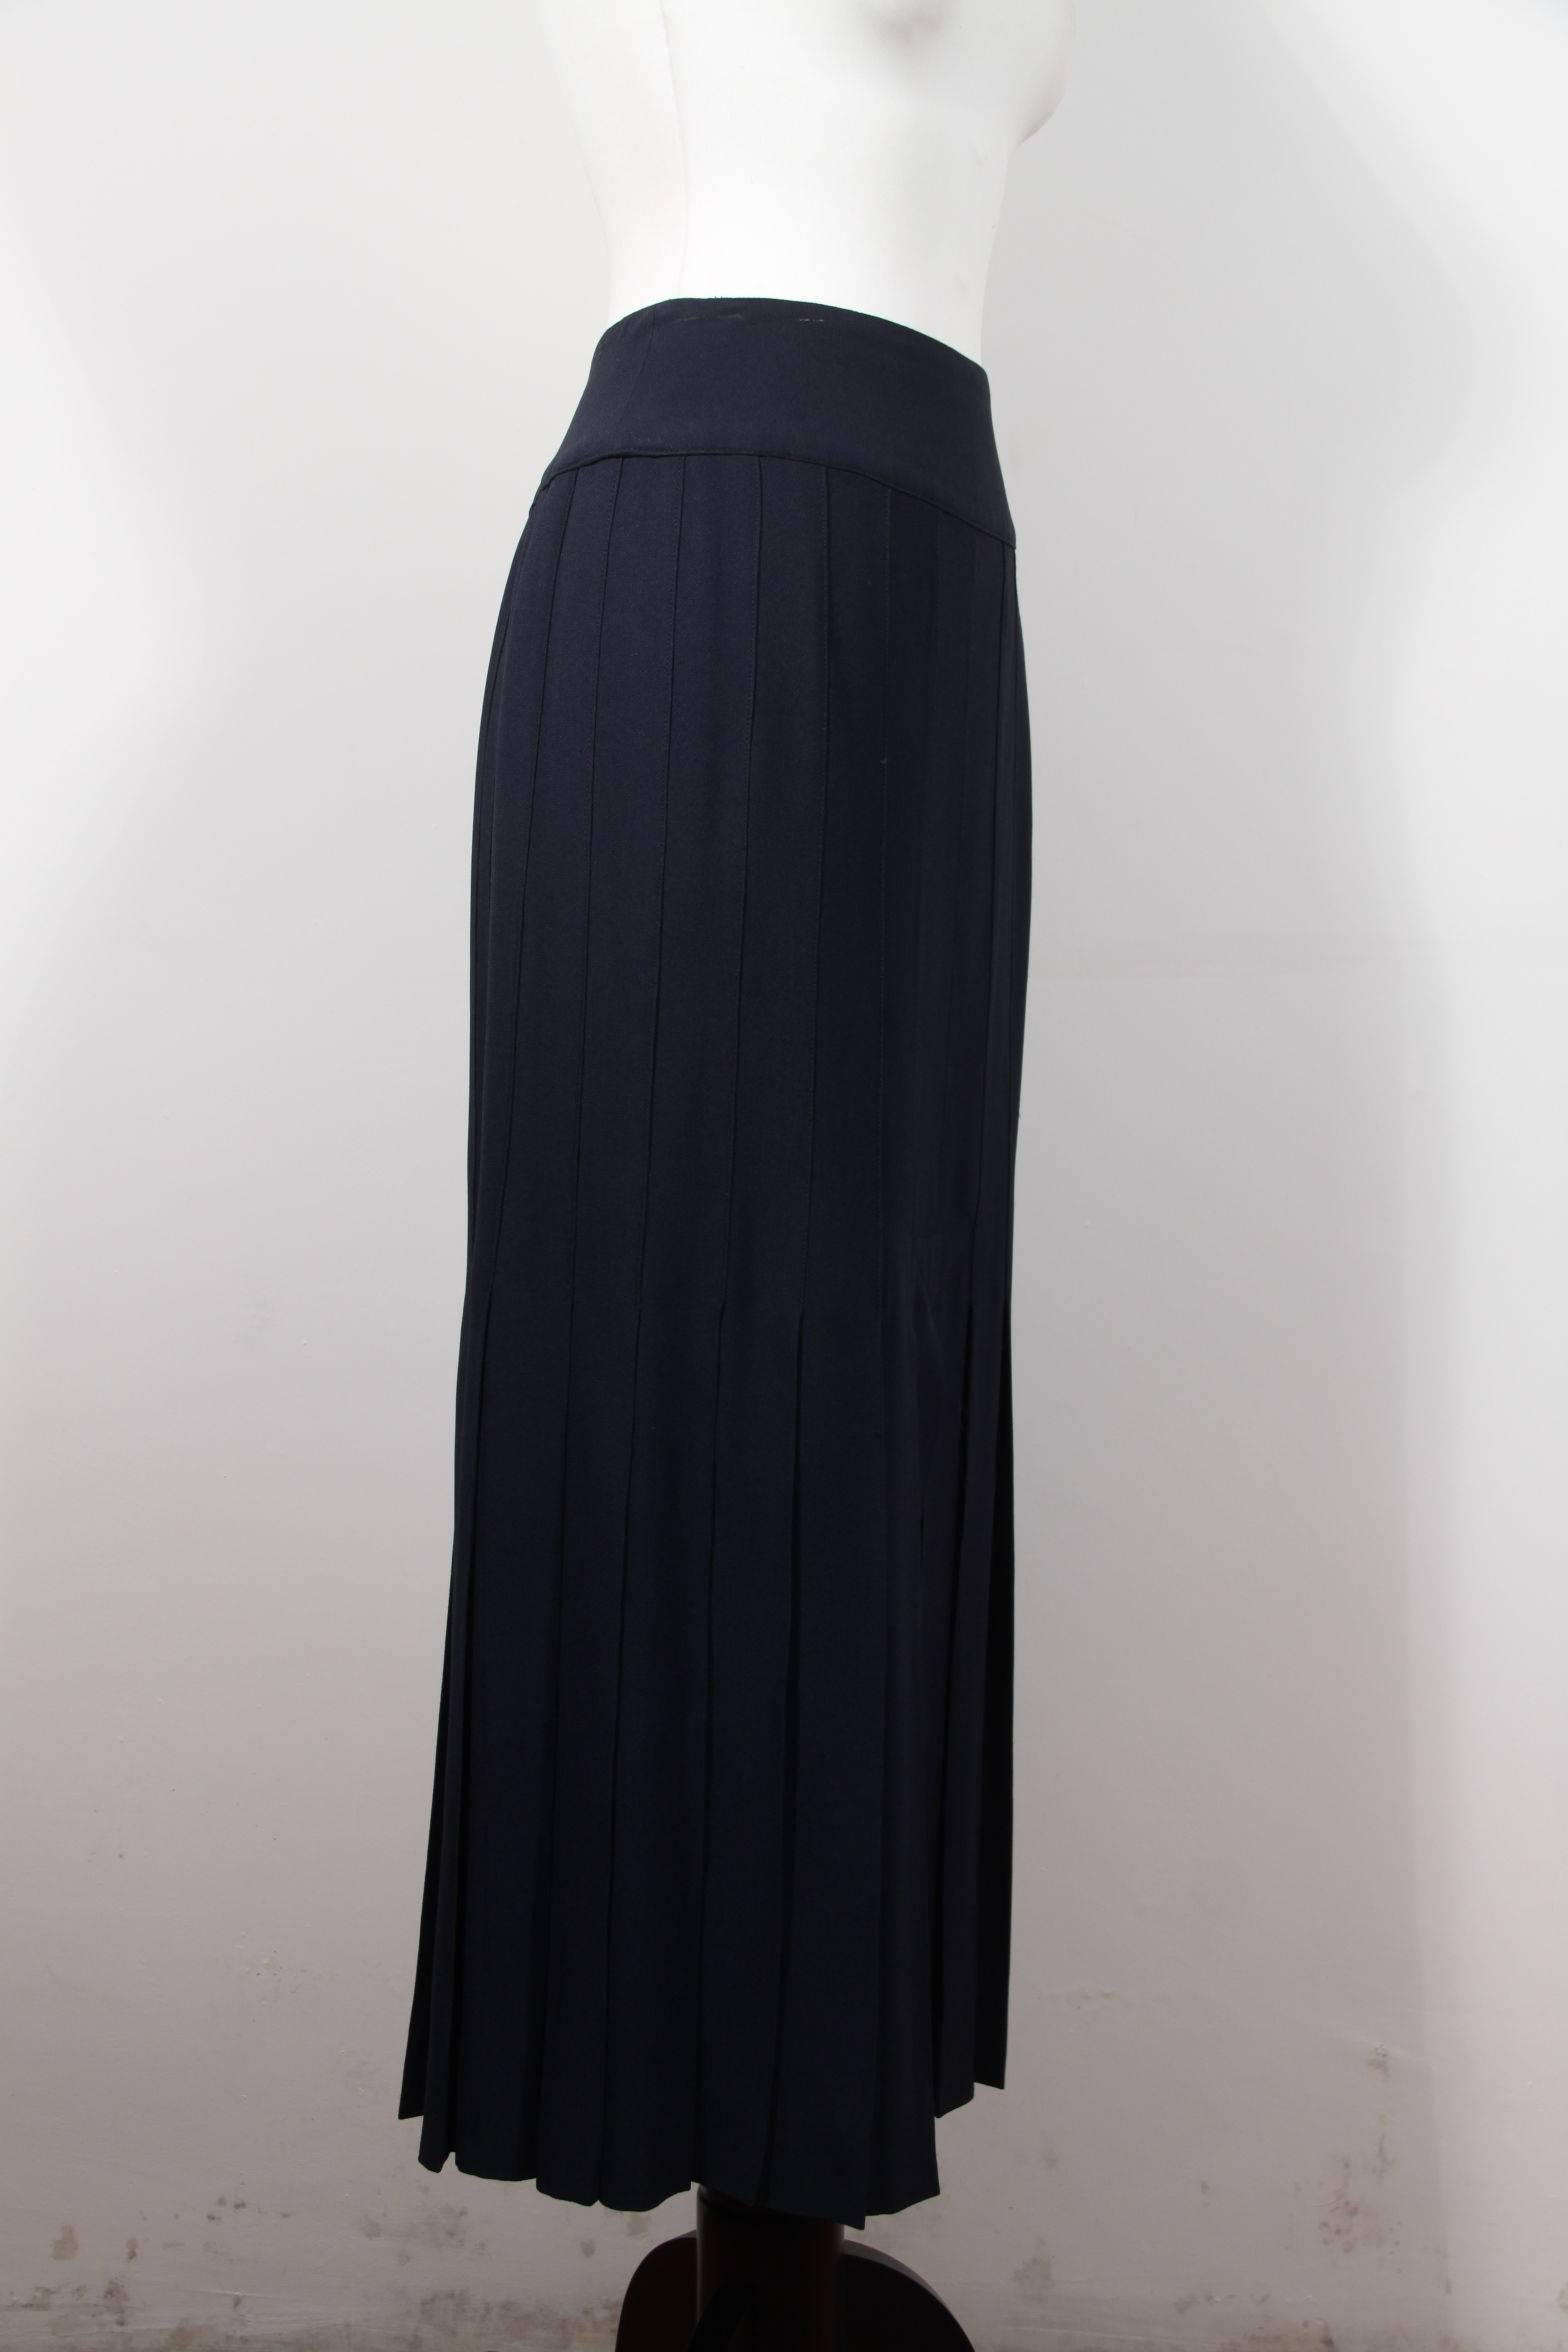 Women's CHANEL BOUTIQUE Vintage Navy Blue Long MAXI SKIRT w/ PLEATS Size 38 FR